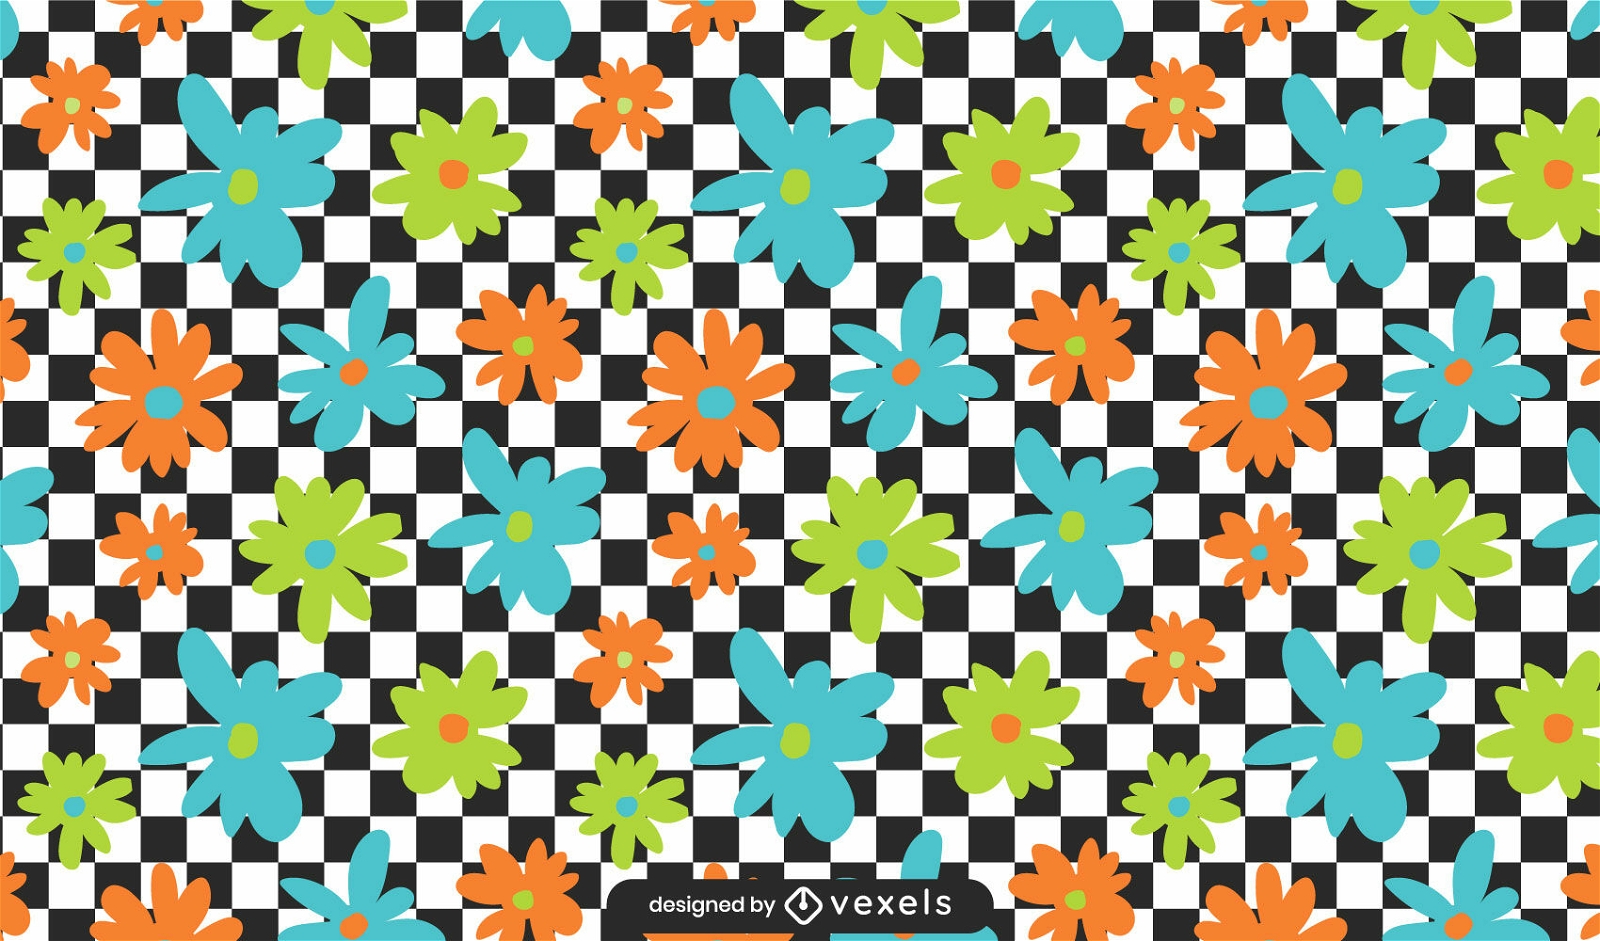 Checkered floral pattern design